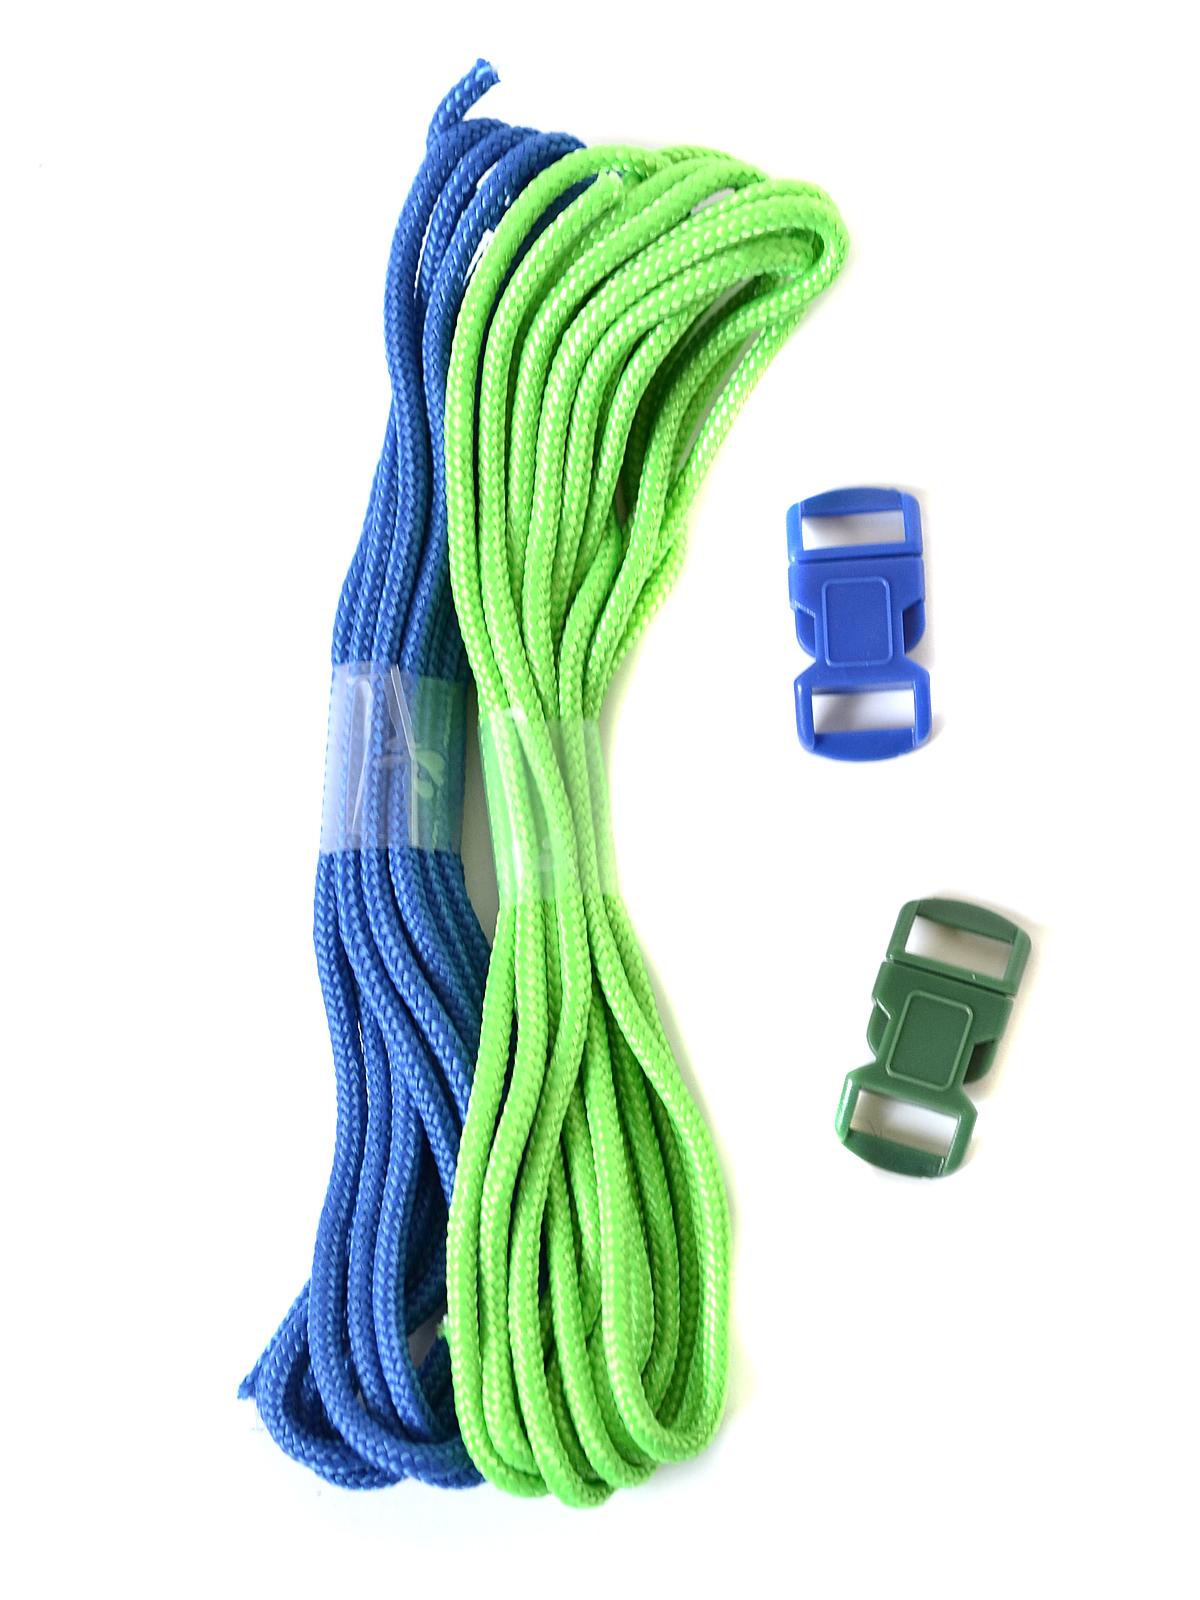 Parachute Cord Friendship Bracelet Kits Blue Green